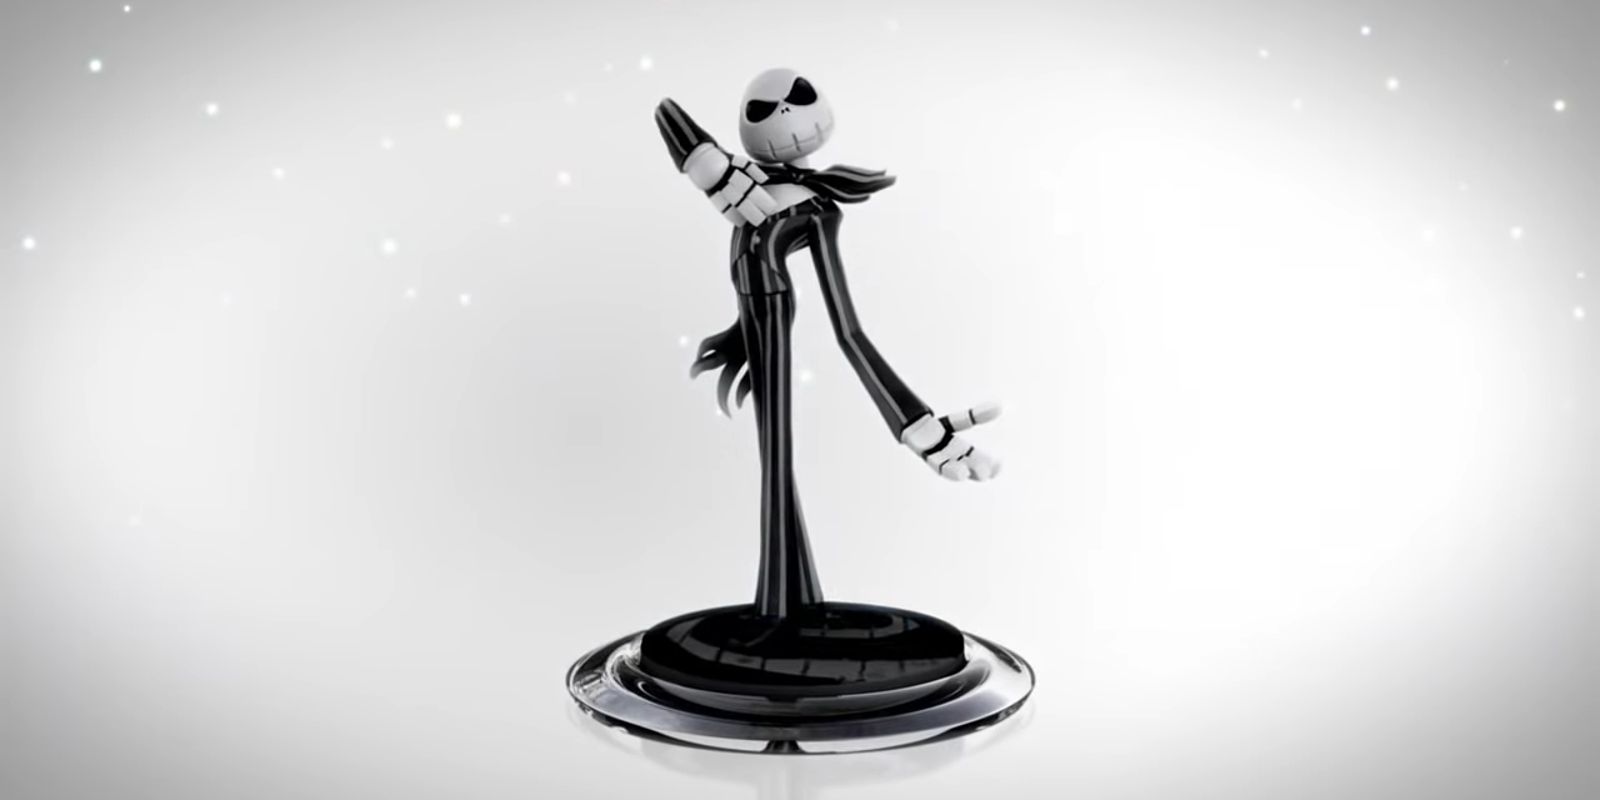 Official render for the Jack Skellington figure for Disney Infinity